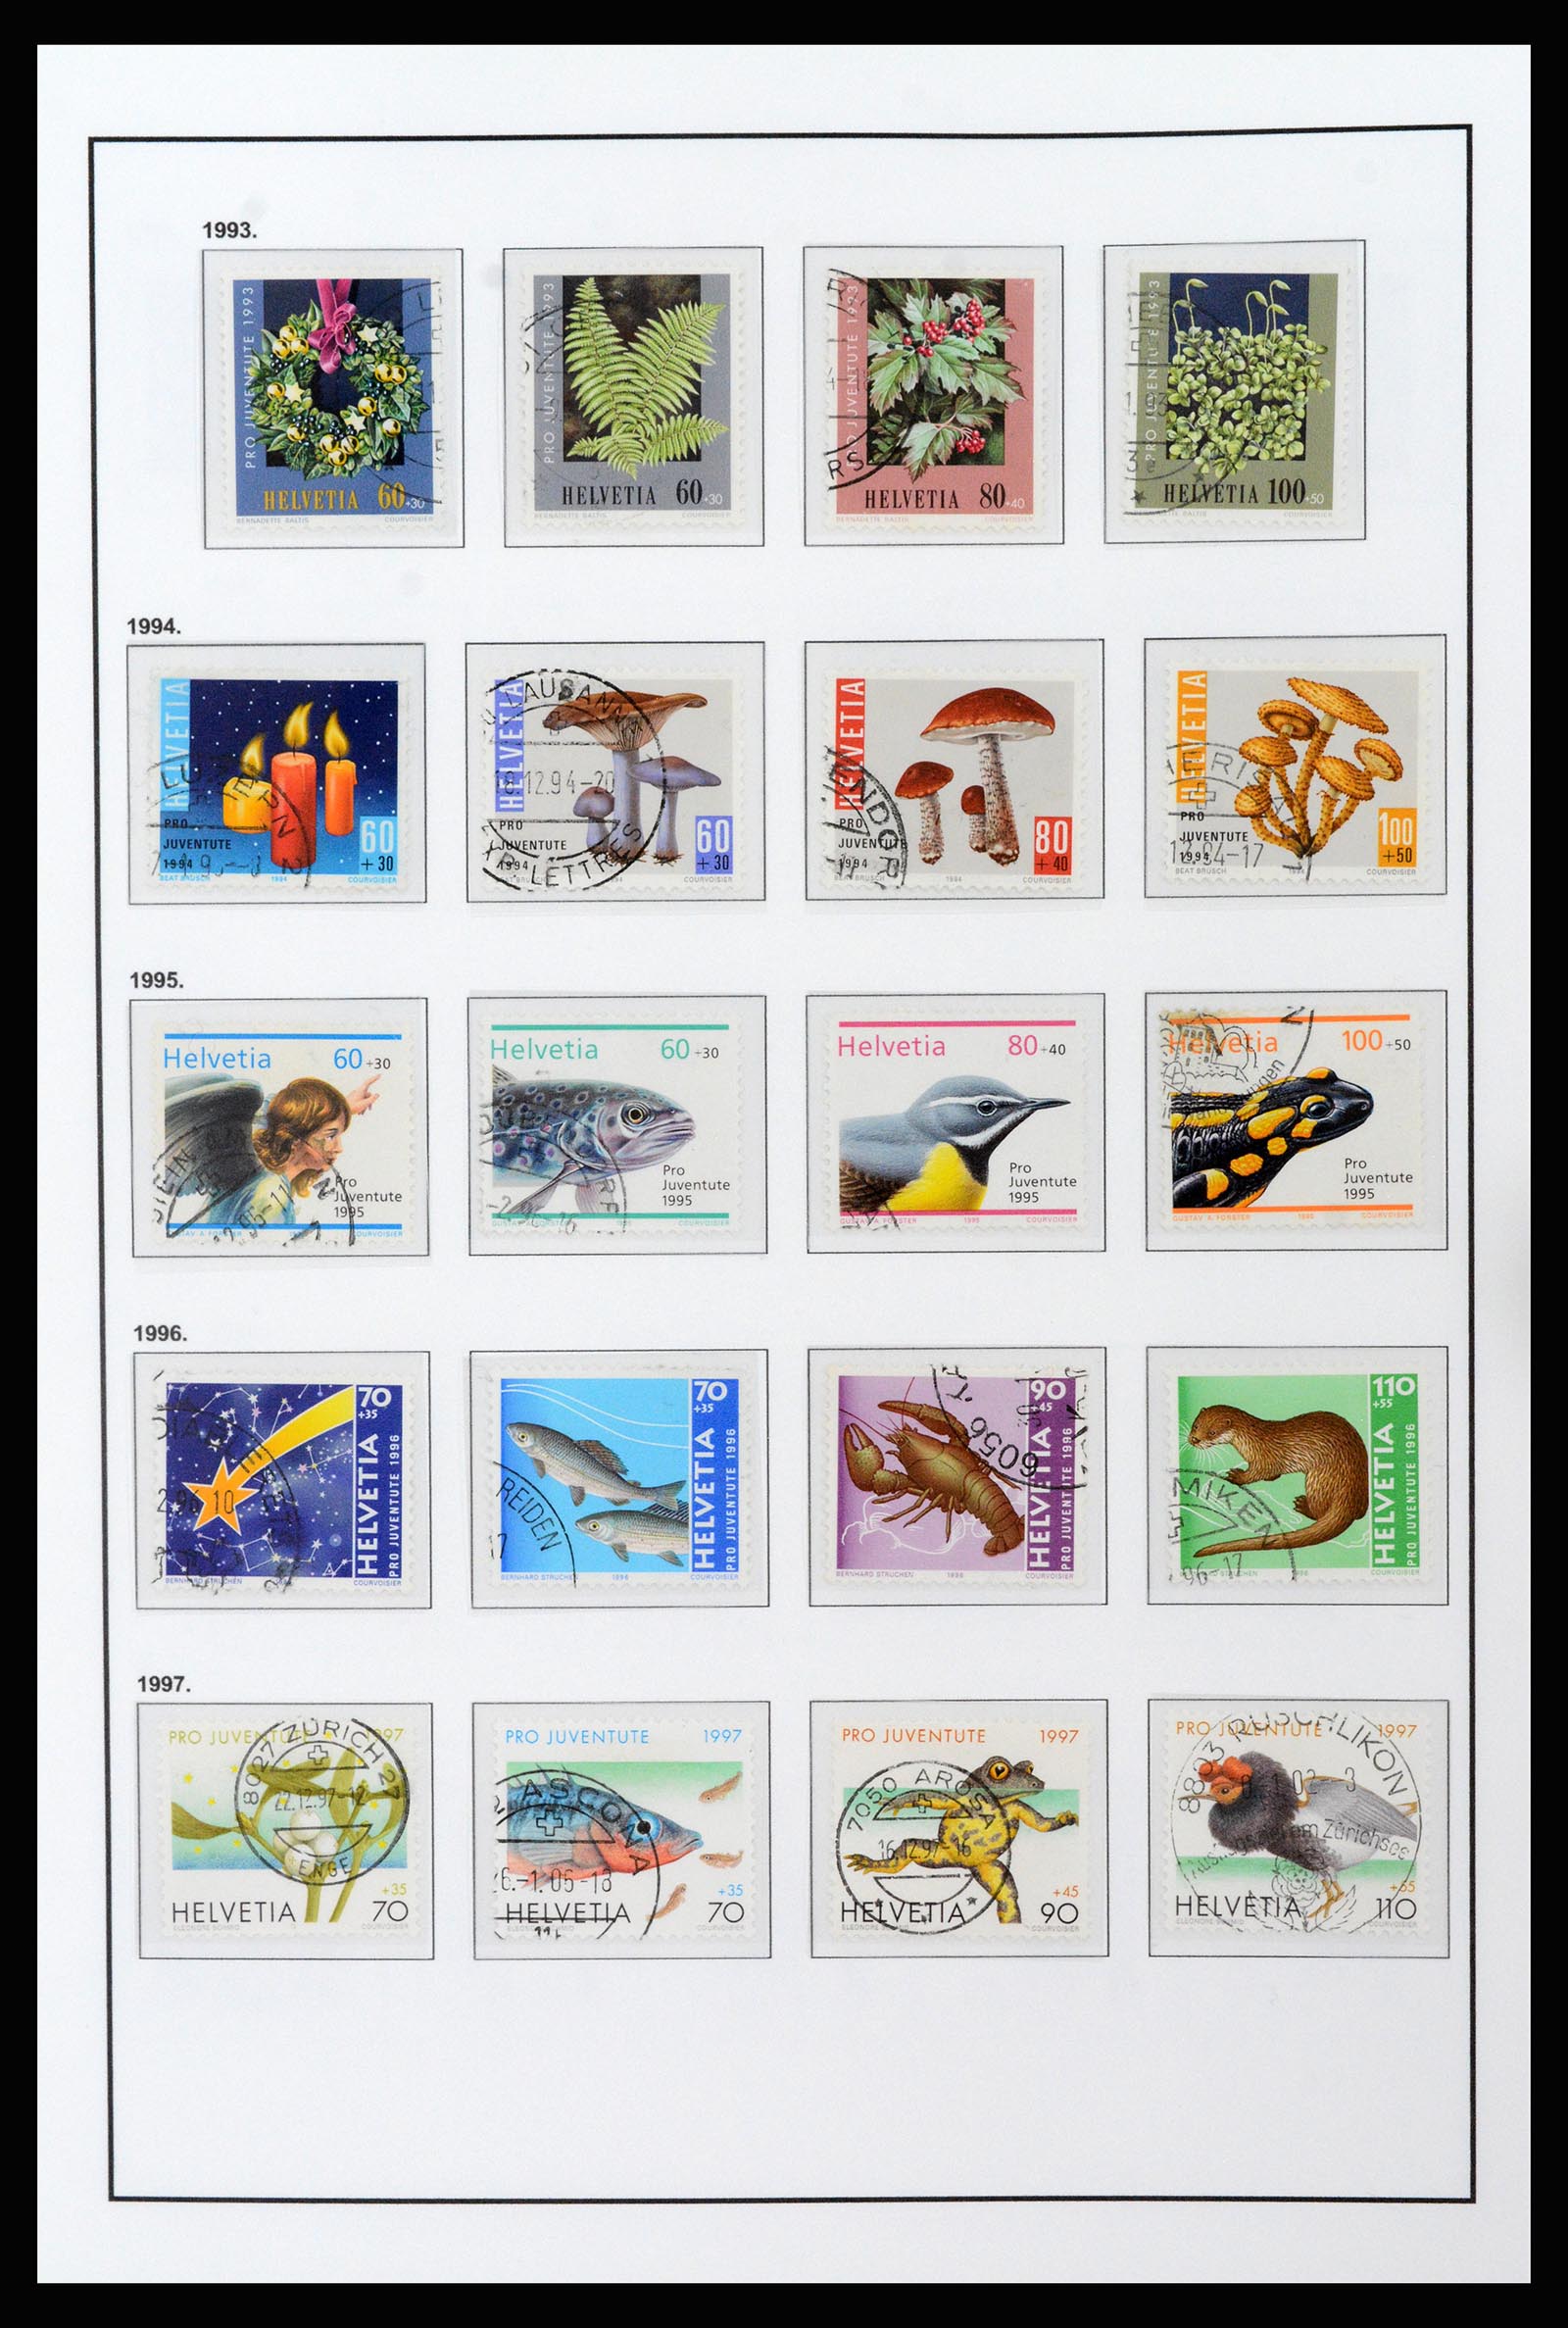 37225 072 - Stamp collection 37225 Switzerland 1854-2020.